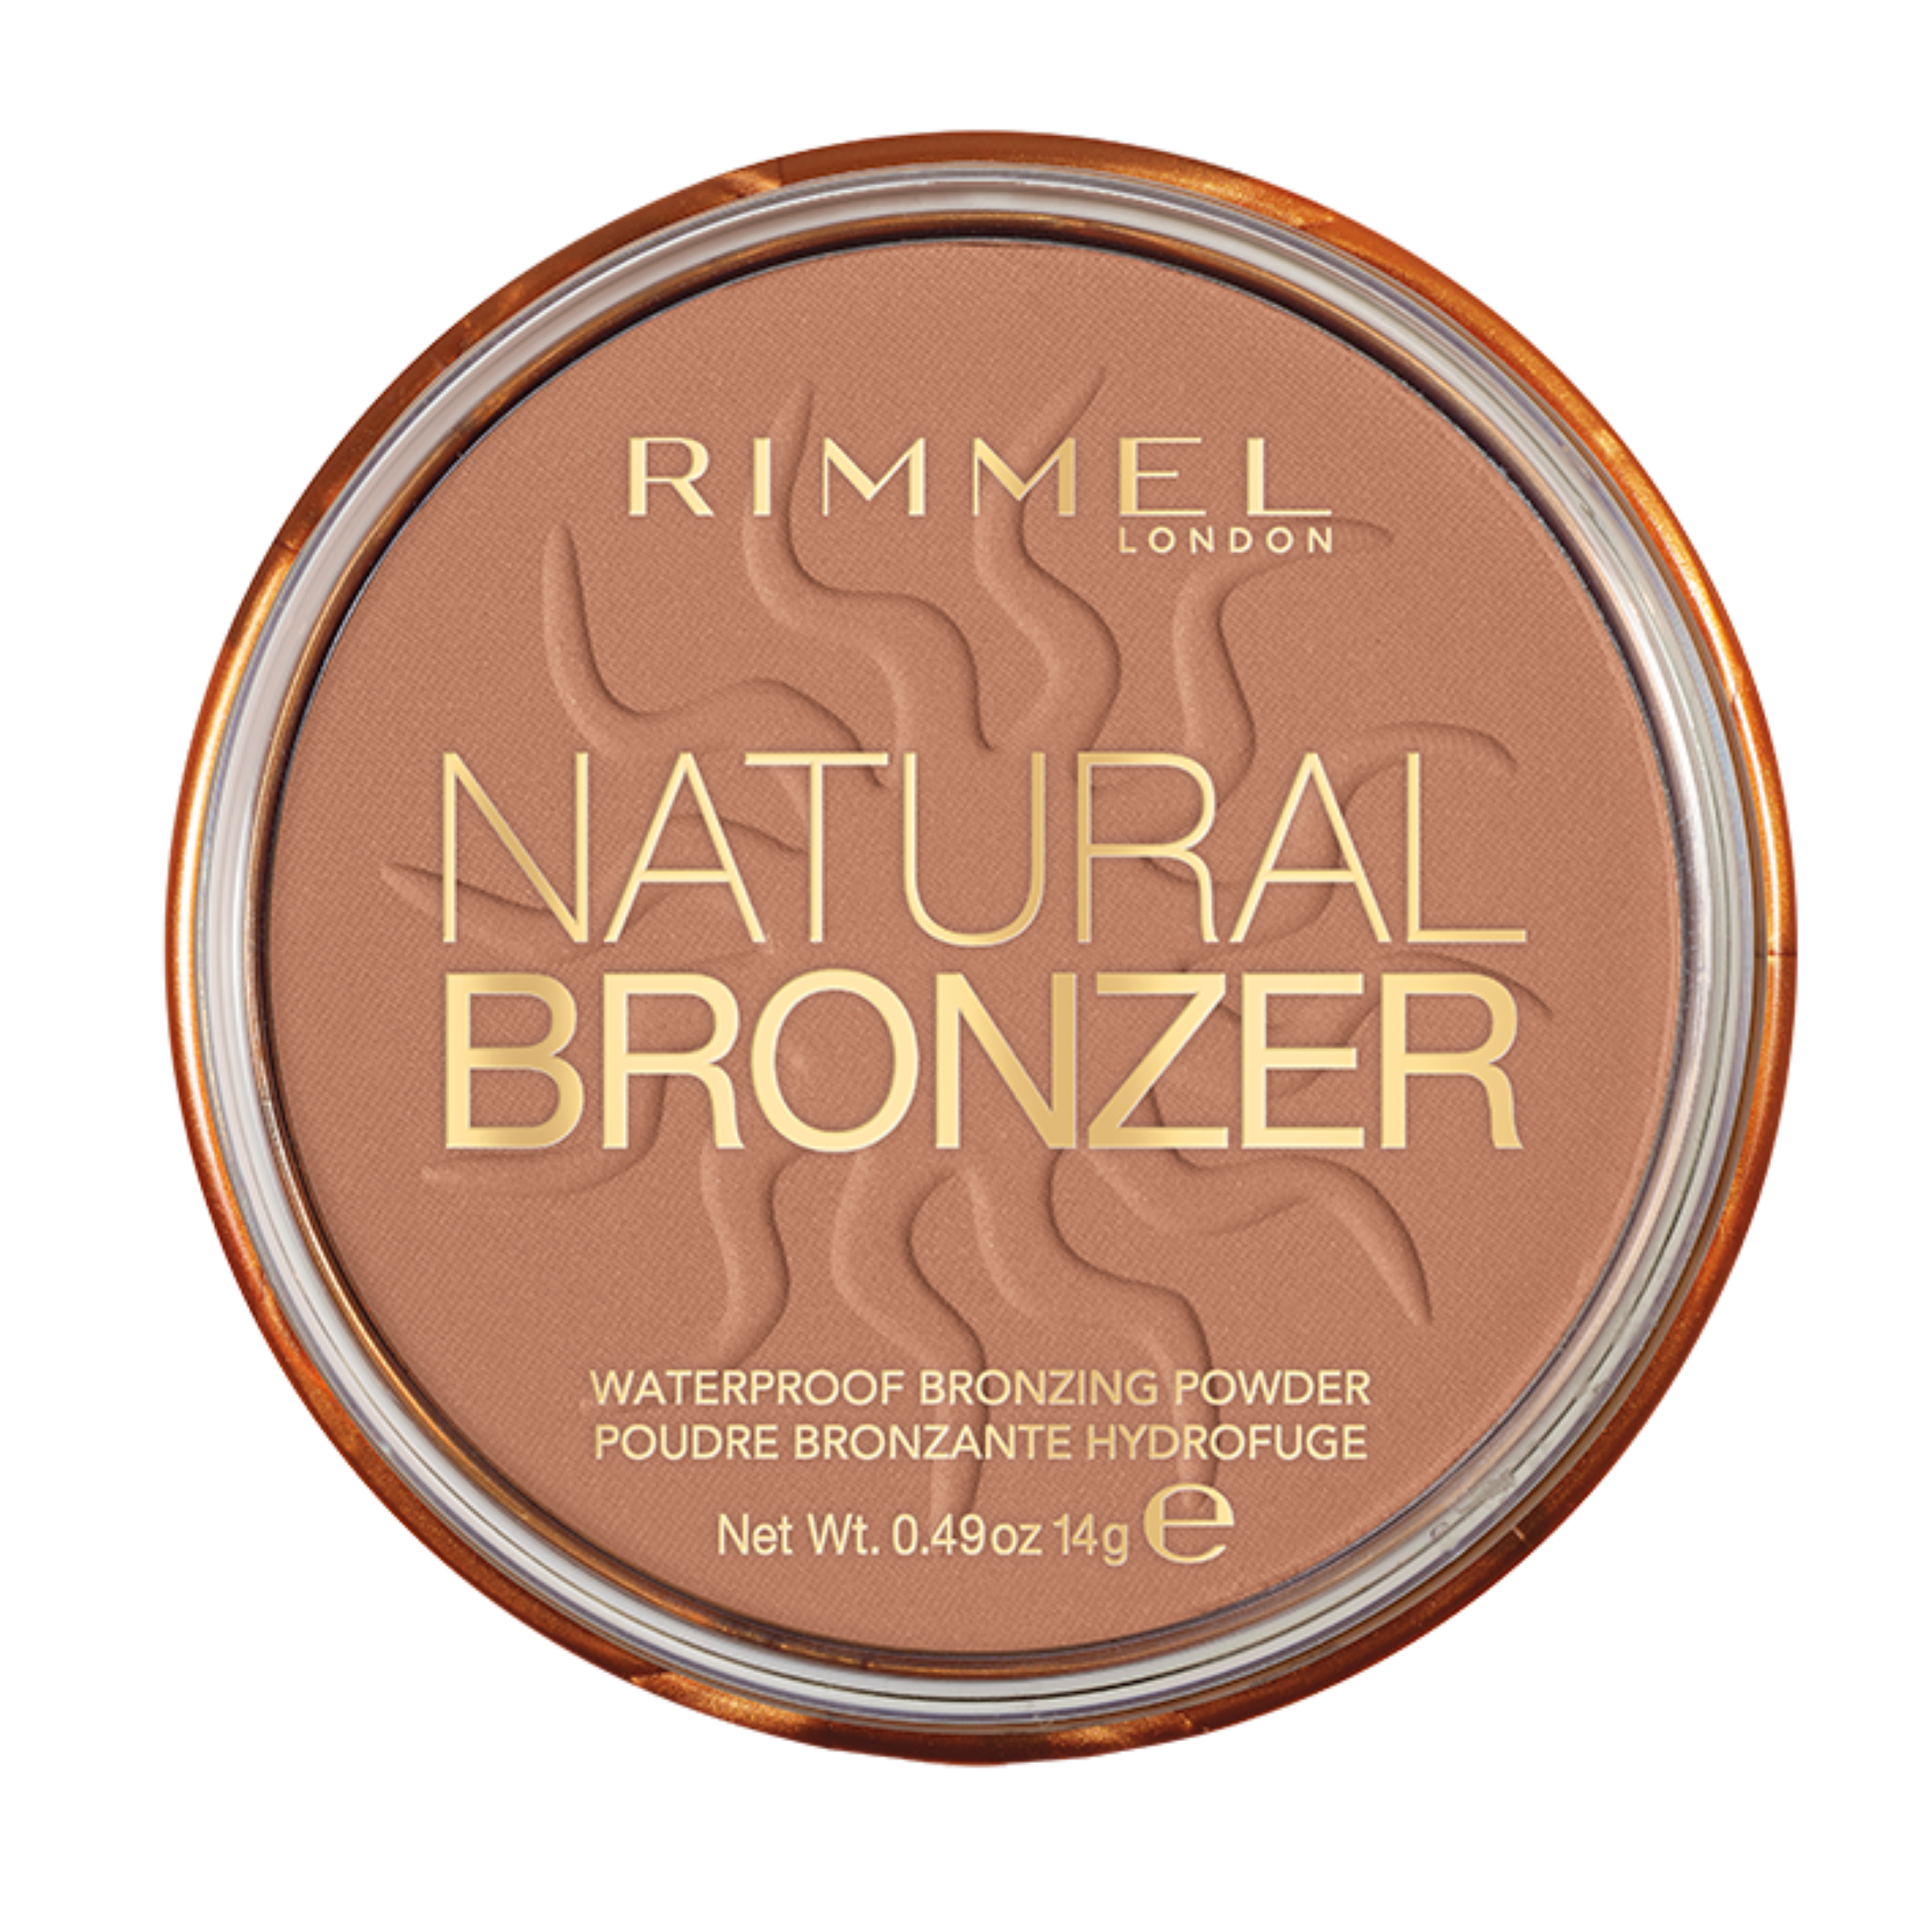 Rimmel London Natural Bronzer, Sun Bronze, 0.49 oz - image 1 of 9